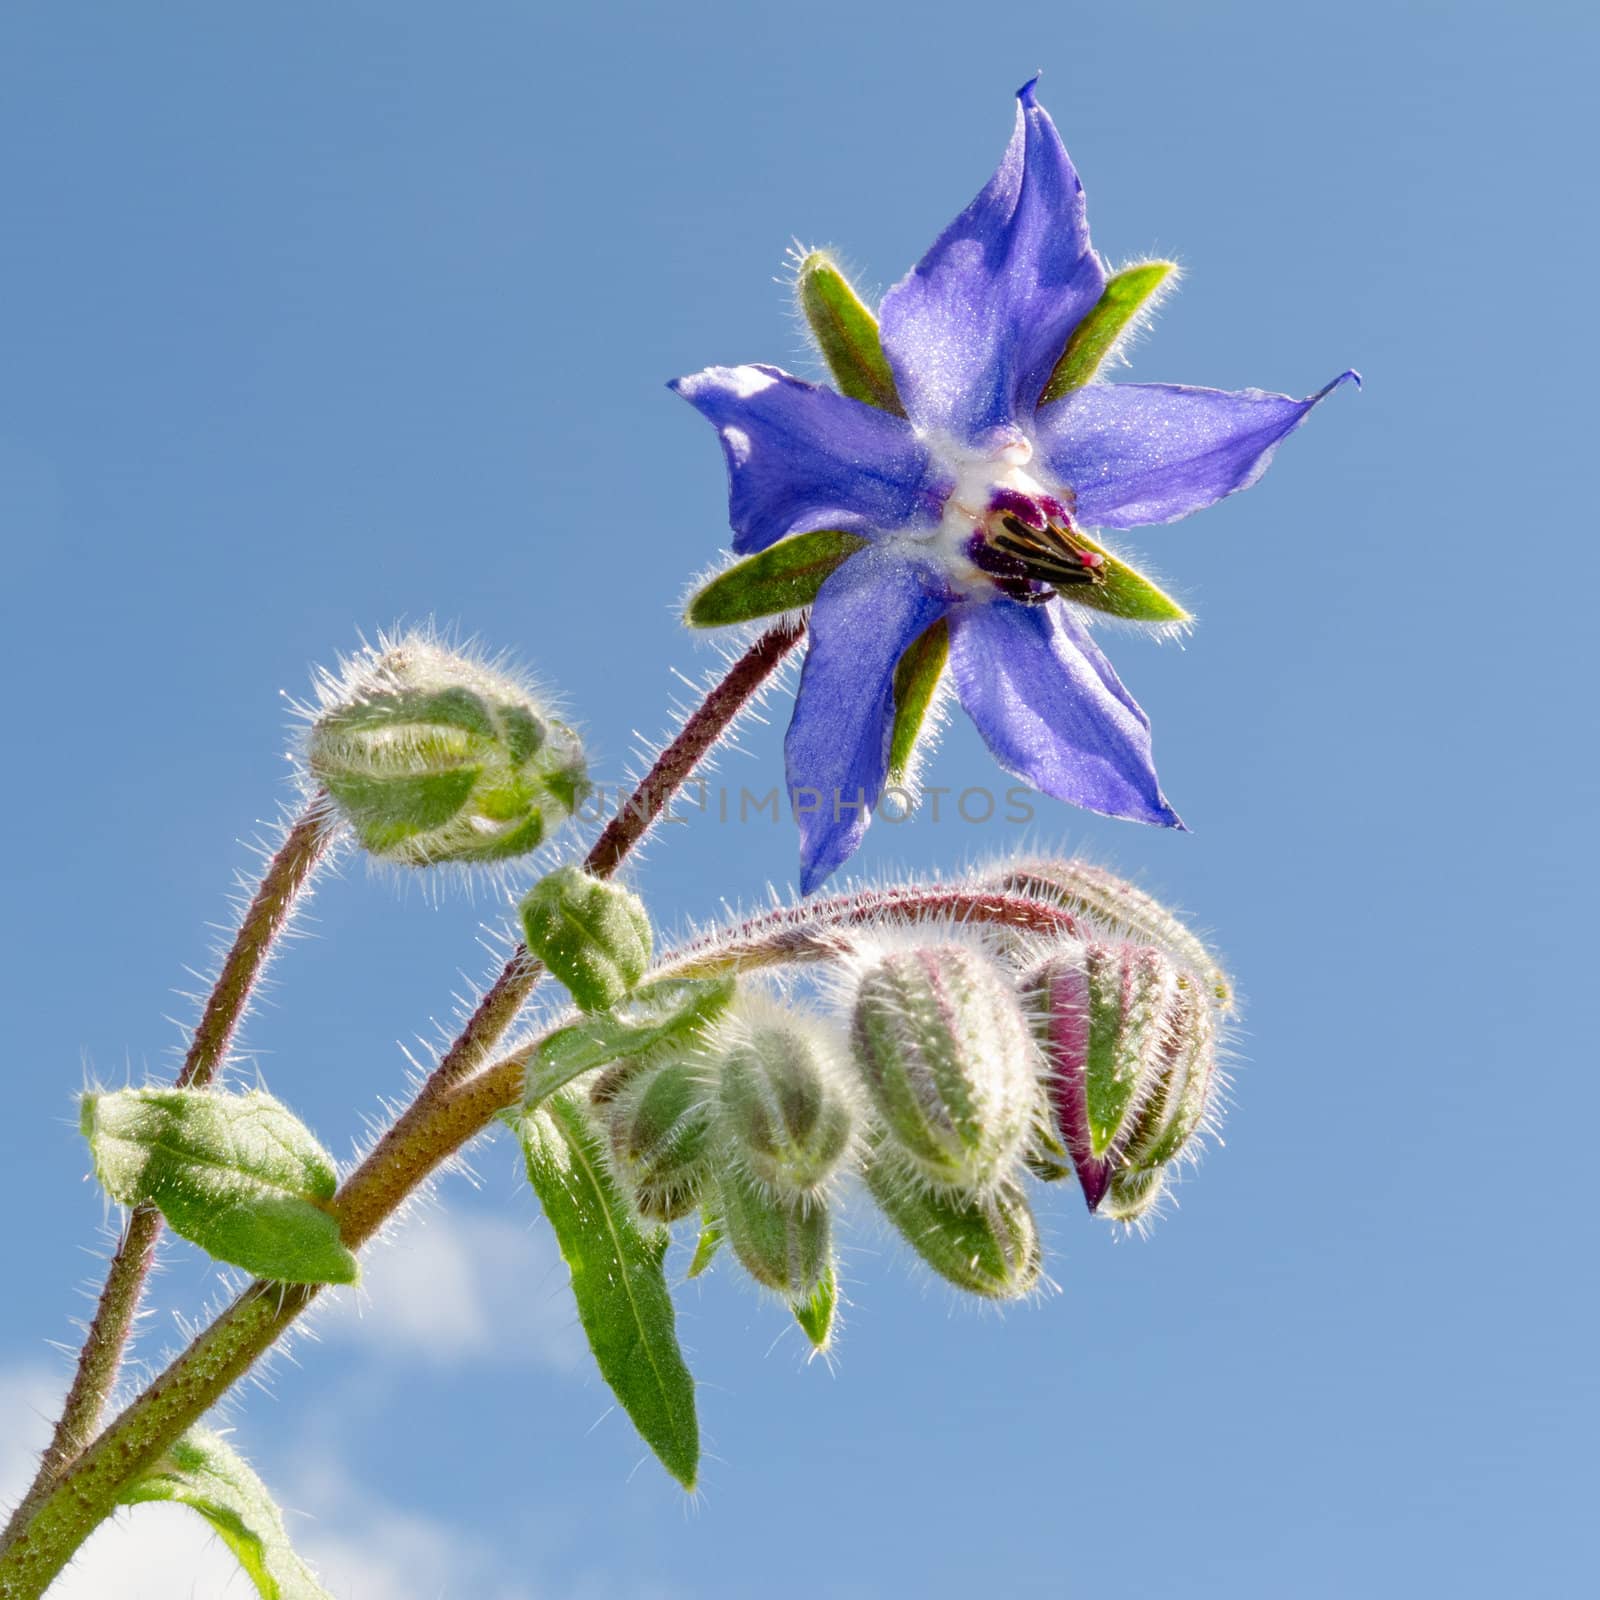 Starflower (Borago officinalis) bloosom and buds against sunny blue summer sky.